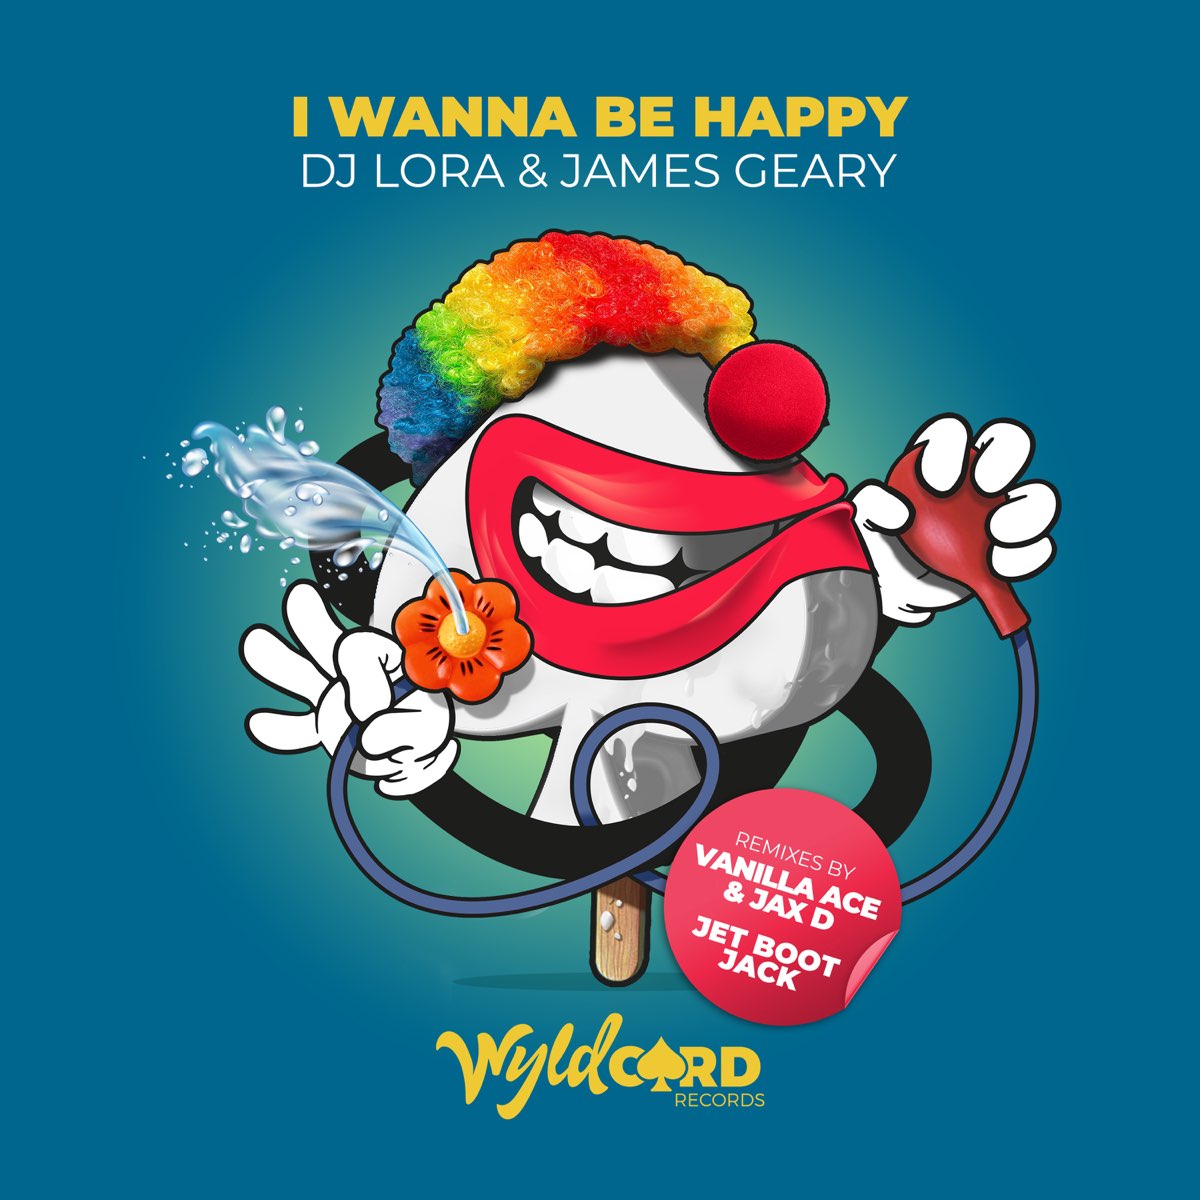 Be happy remix. DJ Lora i wanna be Happy. Lora James. Happy DJ Day. Gorejit i wanna be a.